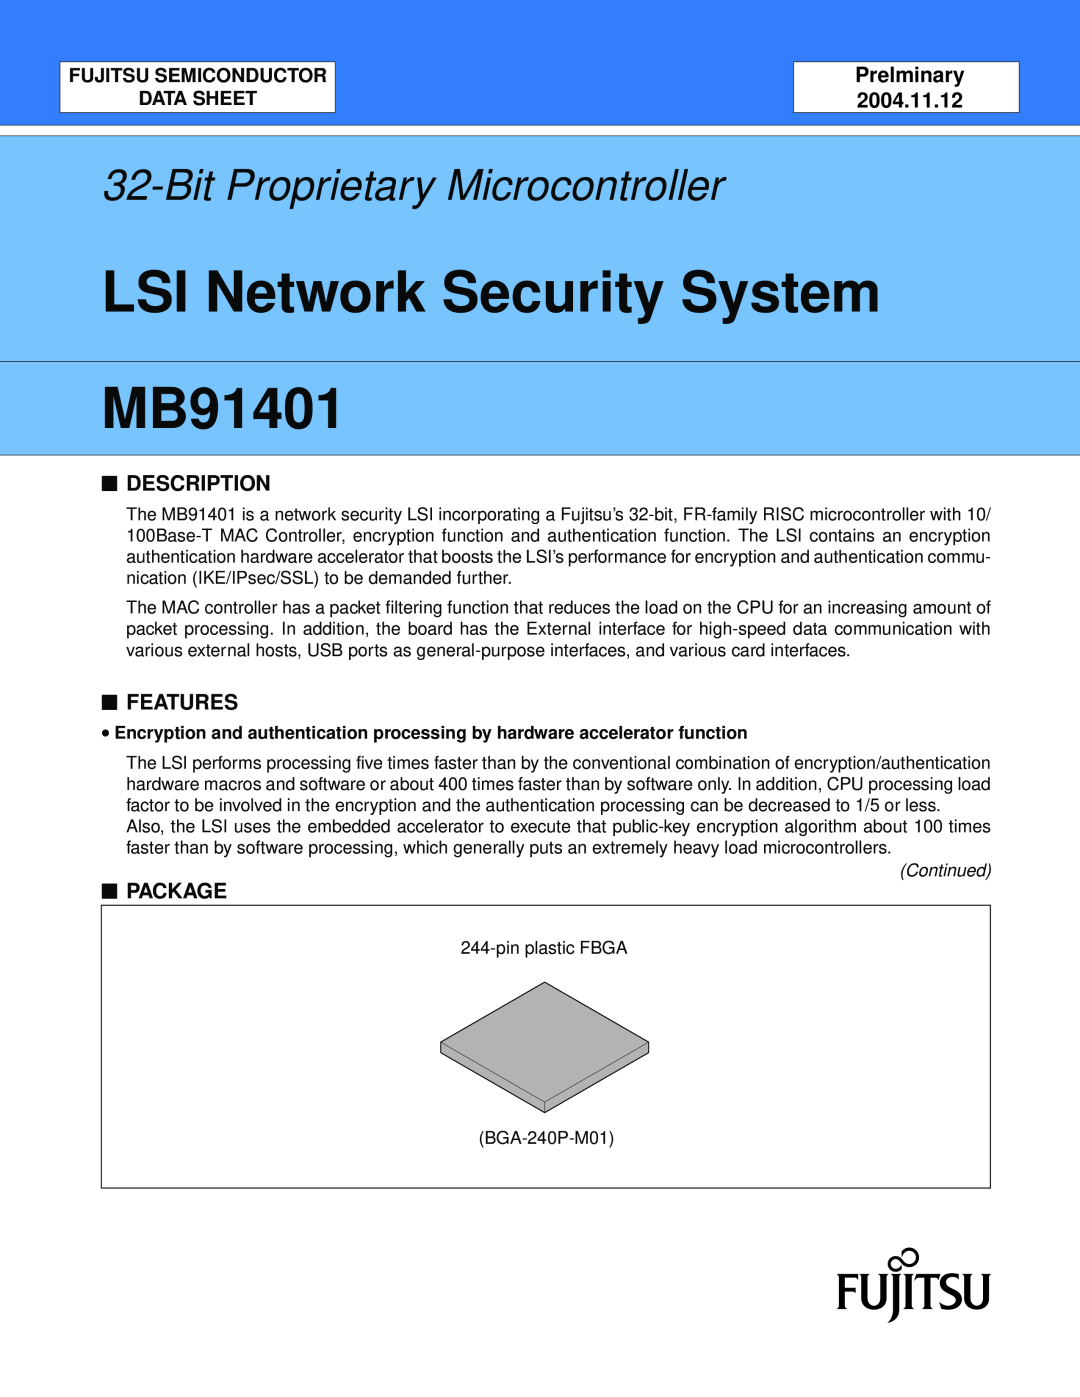 Fujitsu MB91401 manual Prelminary, Description, Features, Package, Fujitsu Semiconductor Data Sheet 